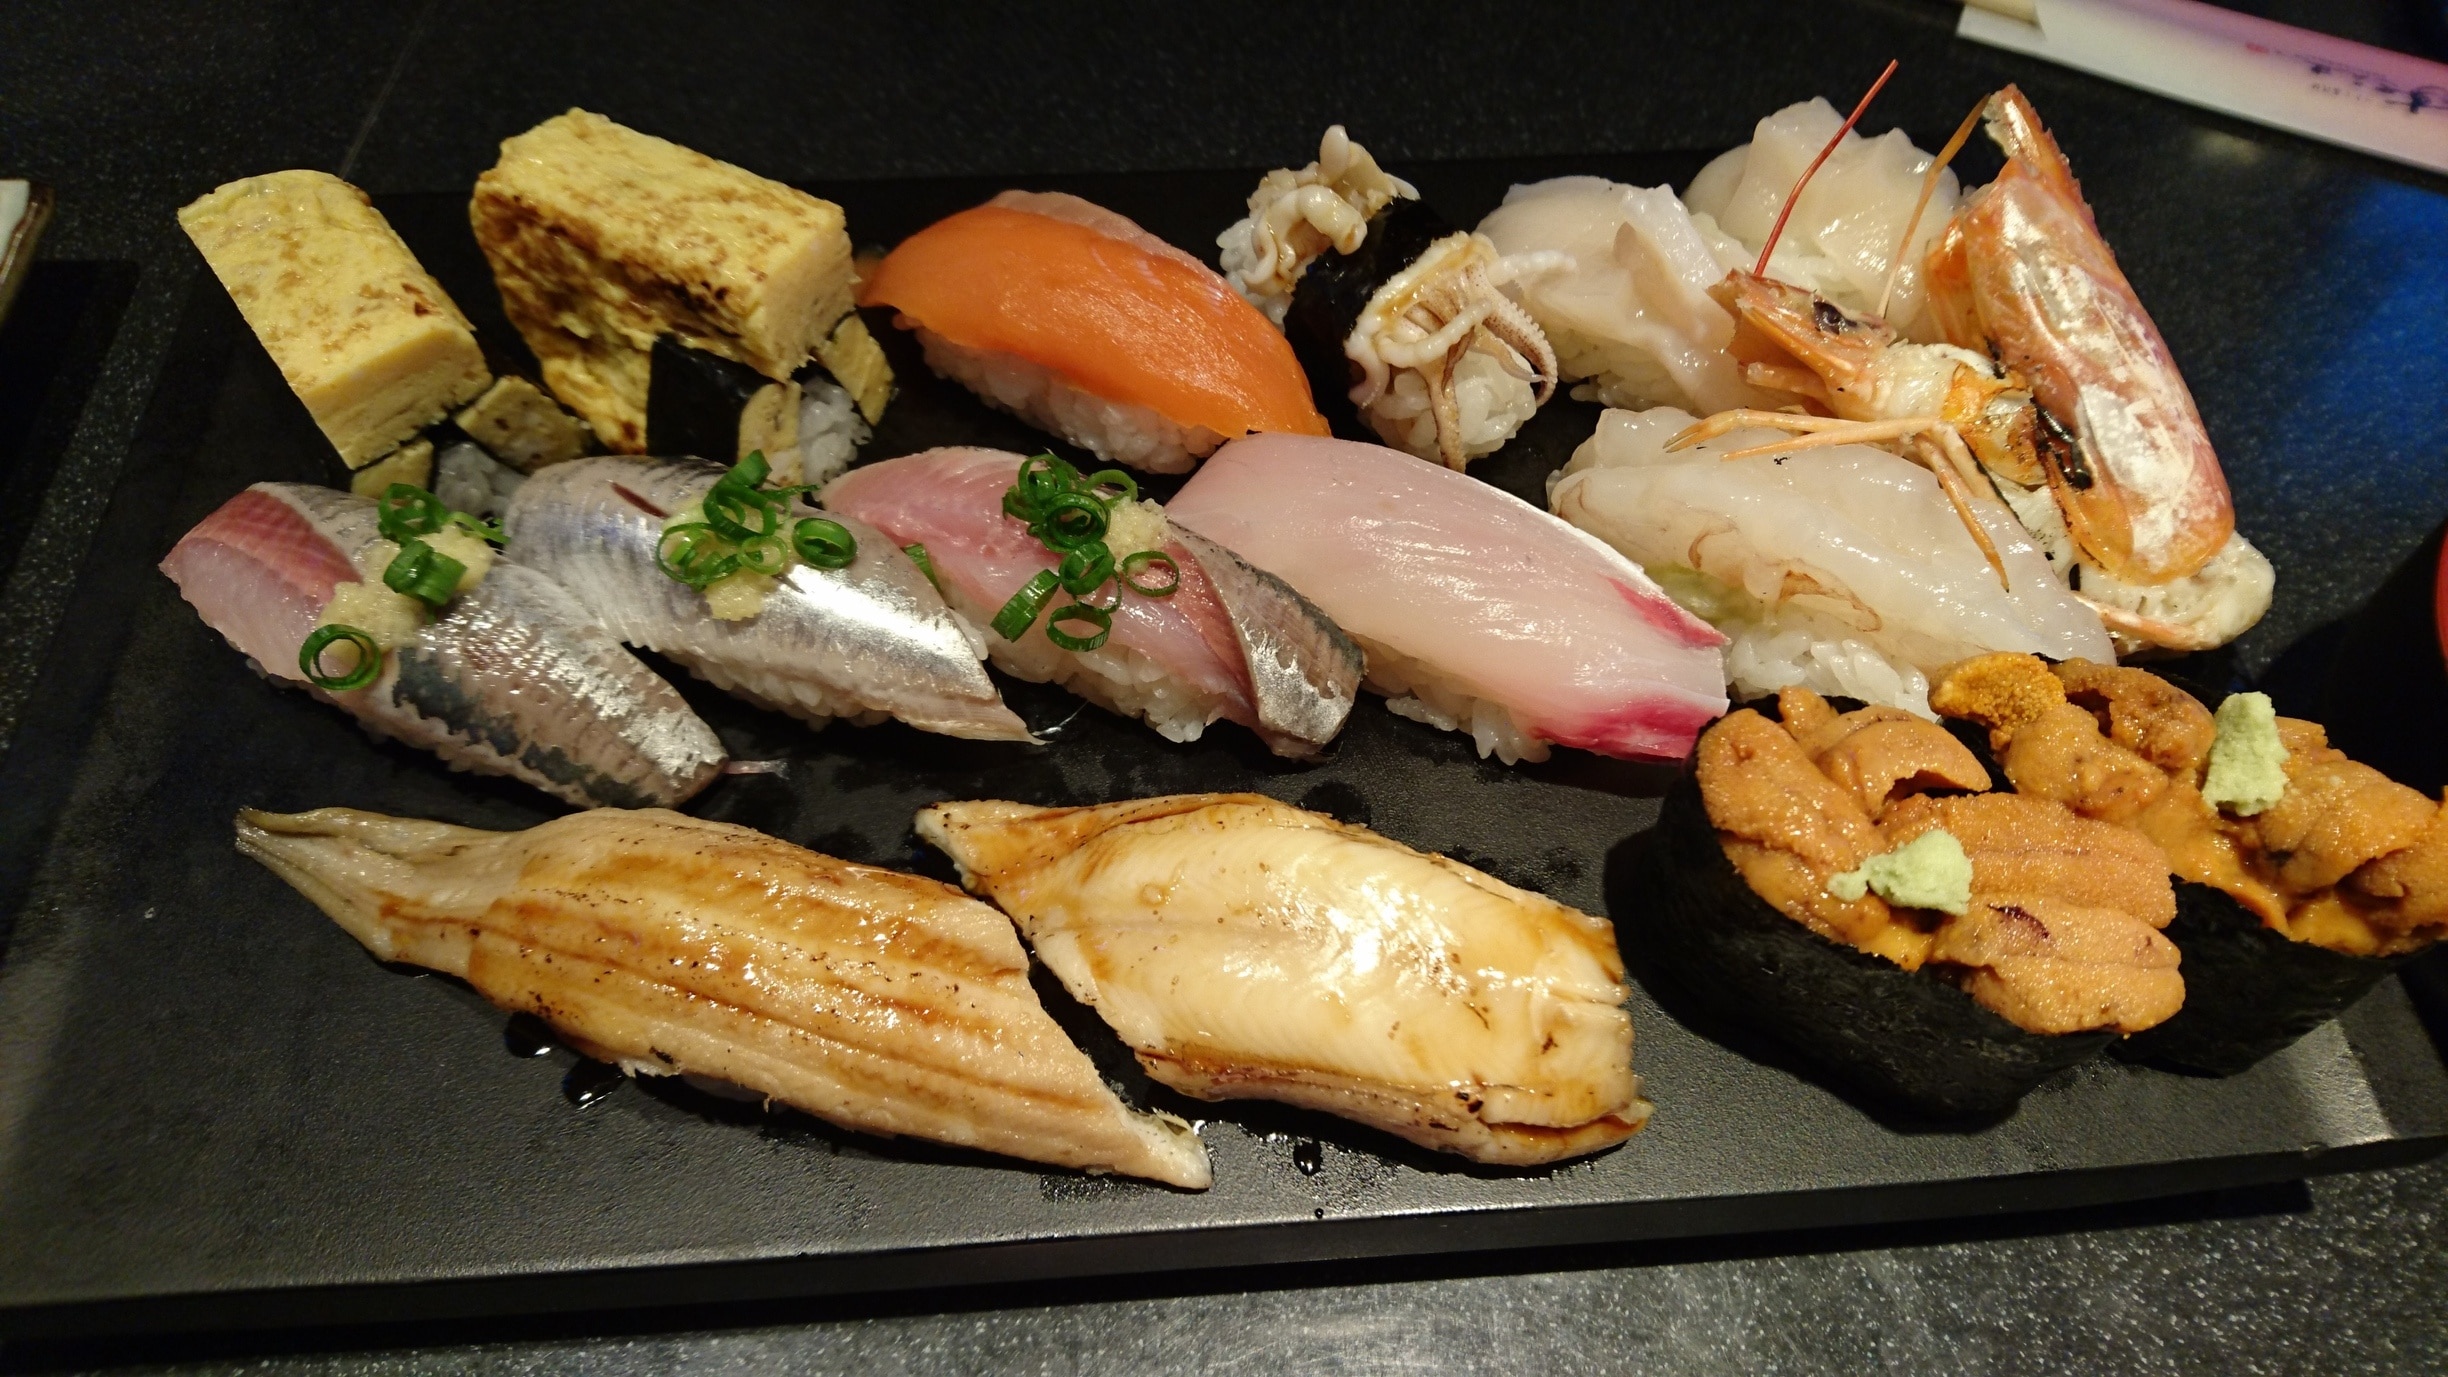 And yes, morning walk through Tsukiji Market. I love salmon best!